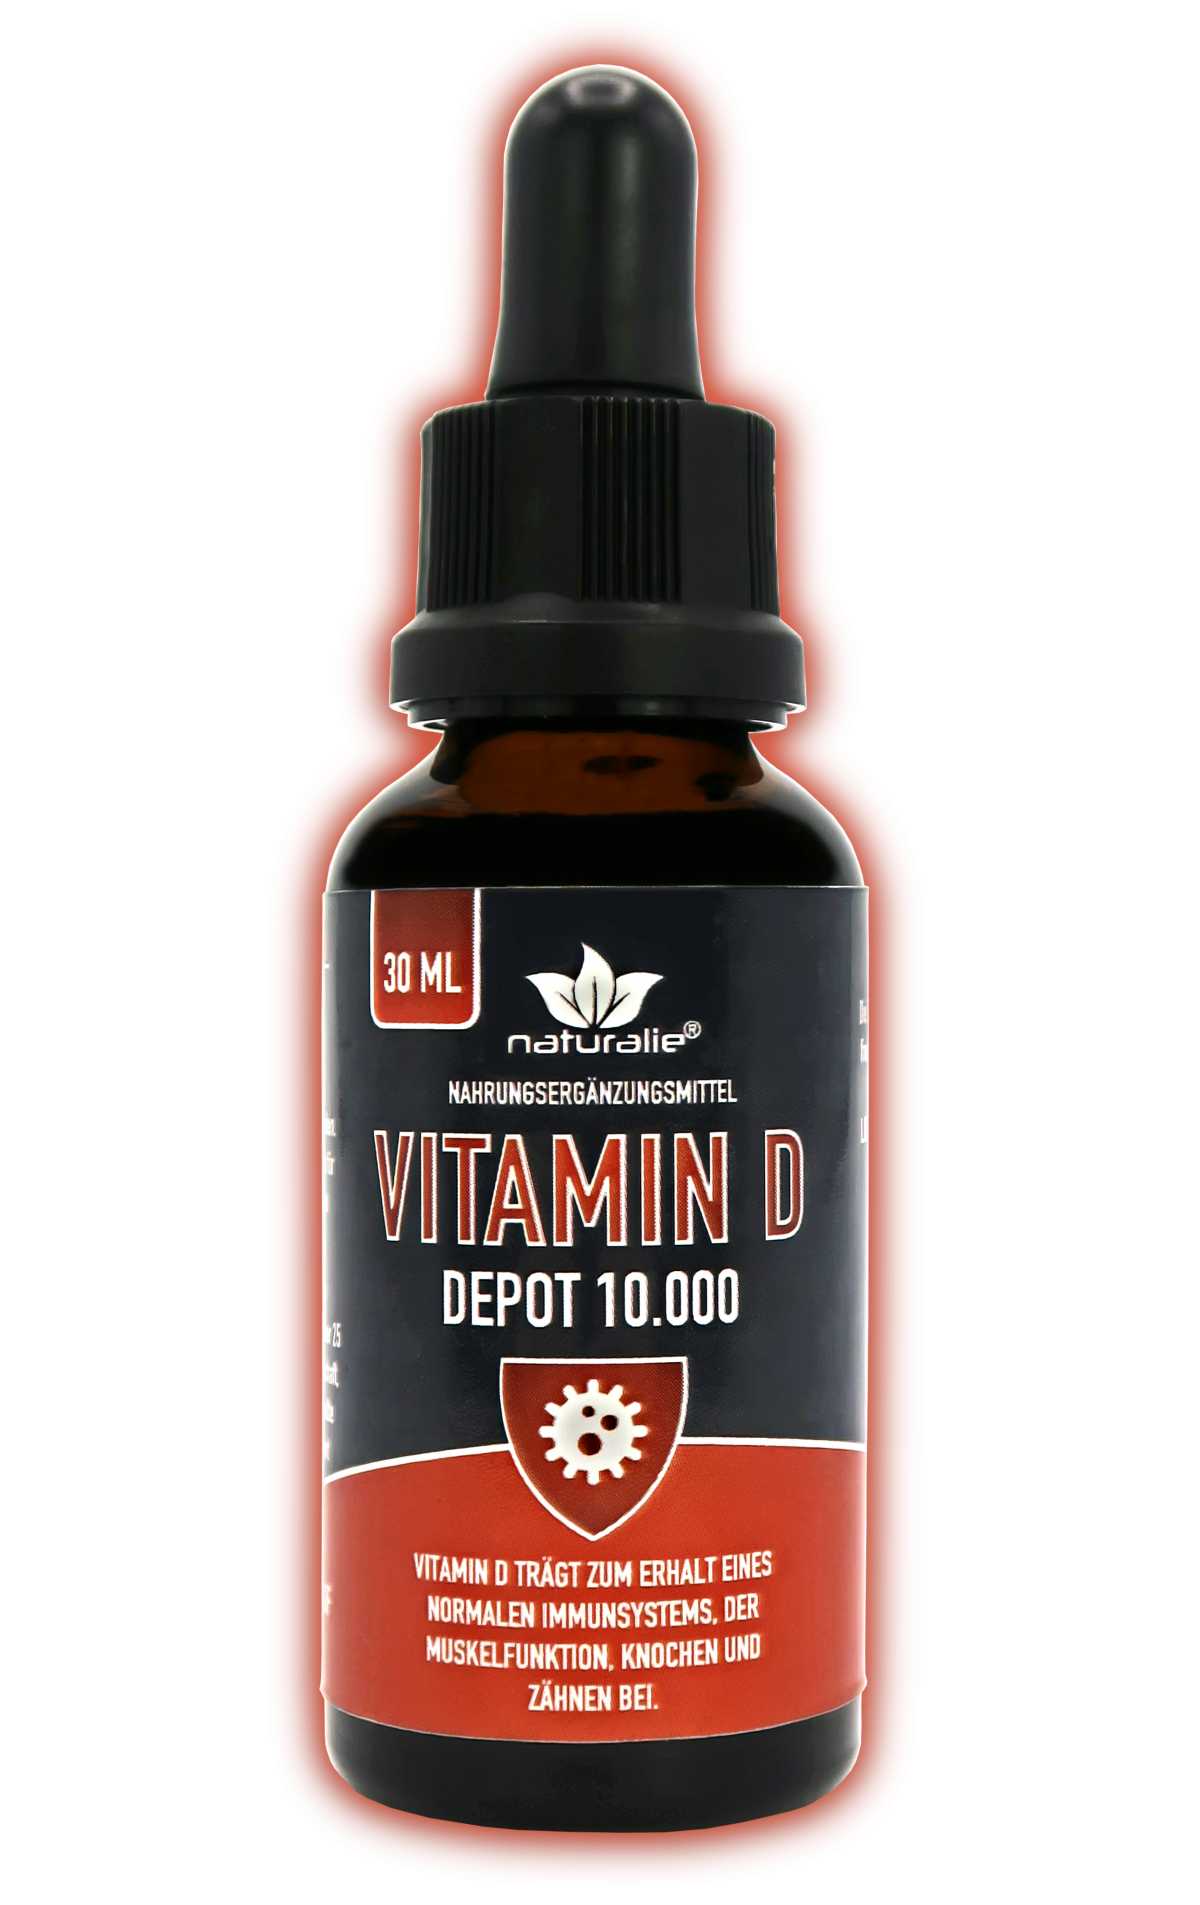 Produktabbildung "Vitamin D Depot 10.000" von AMM-Partner naturalie